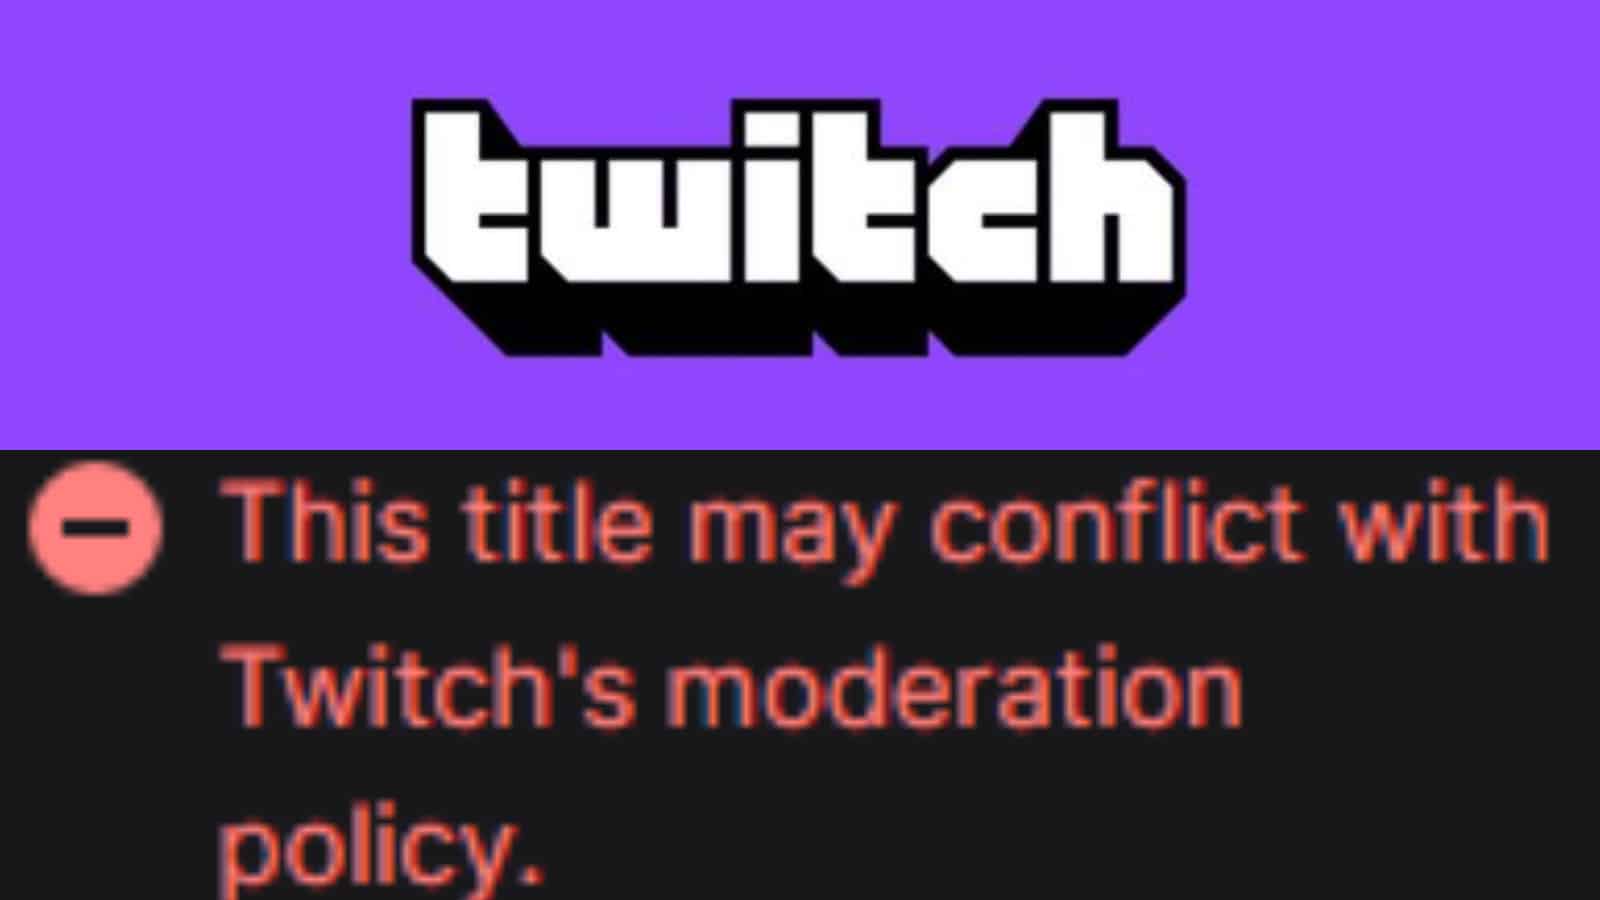 Twitch bans sexist title